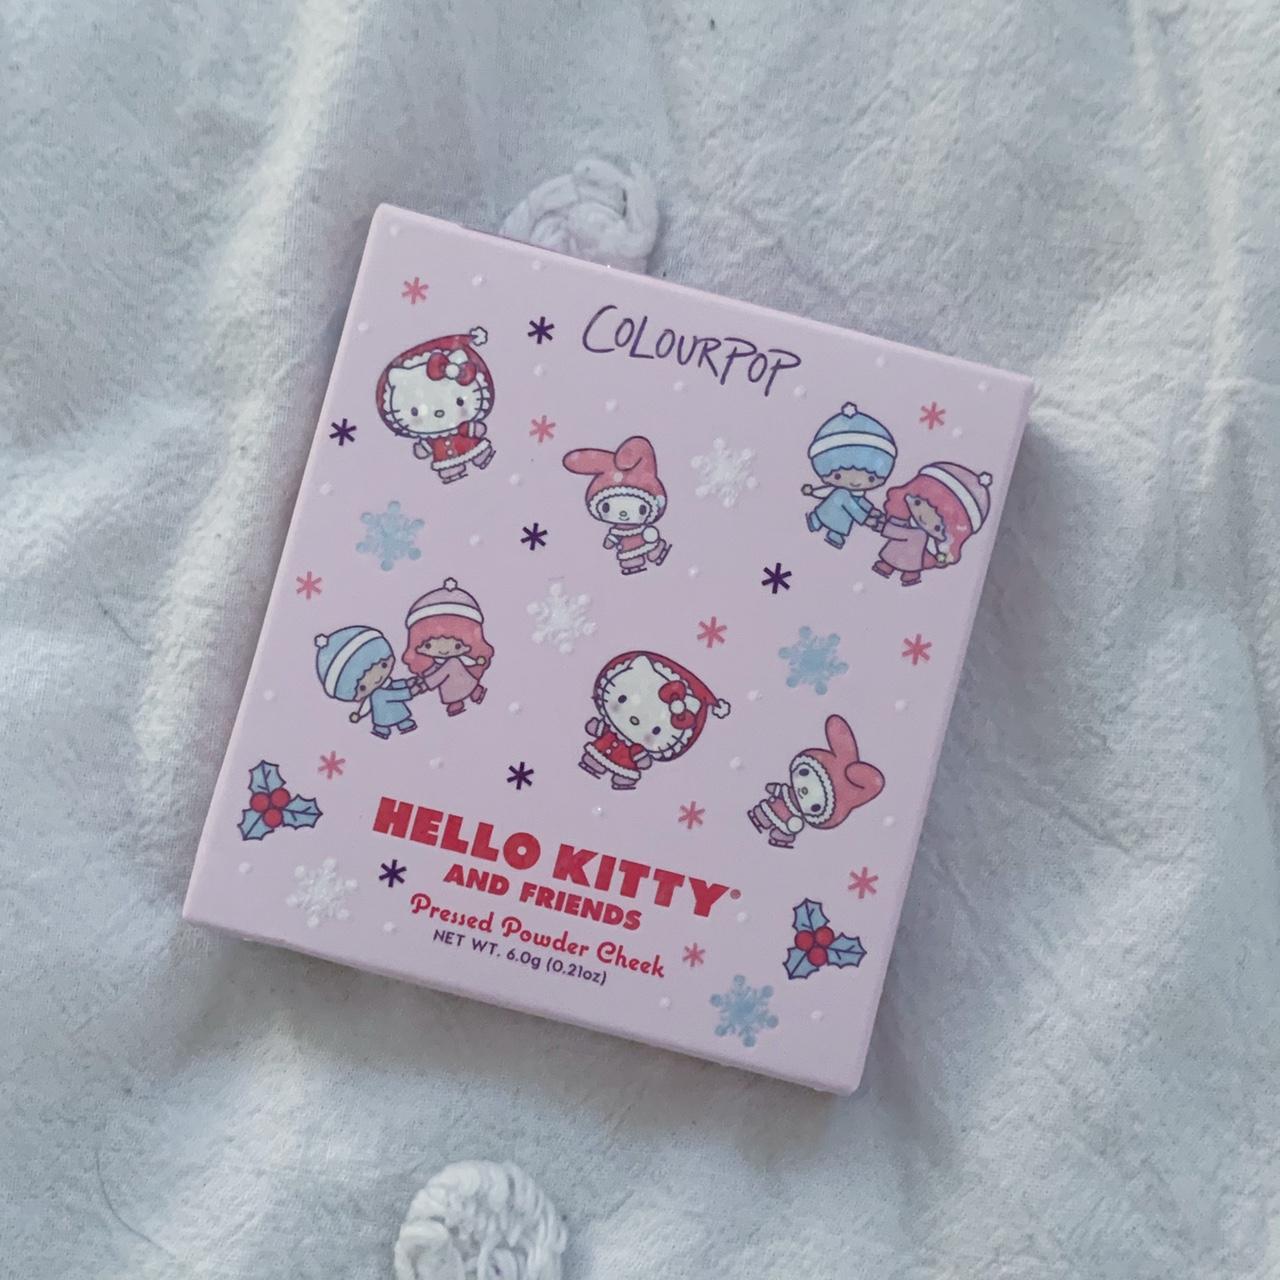 Colourpop Hello Kitty & Friends Blush in the shade - Depop